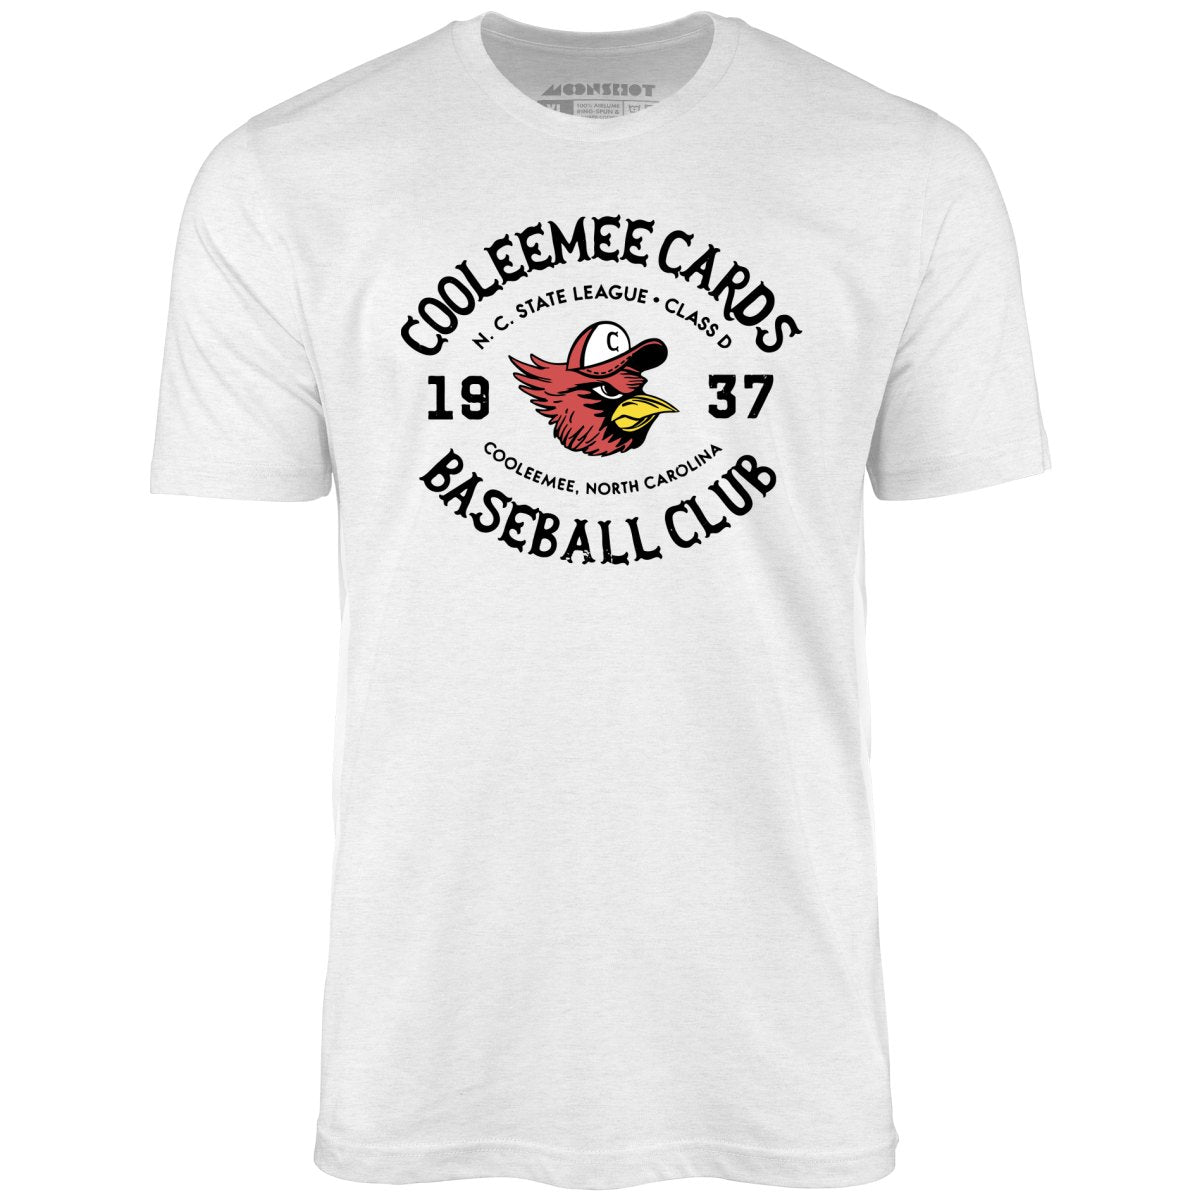 Cooleemee Cards - North Carolina - Vintage Defunct Baseball Teams - Unisex T-Shirt